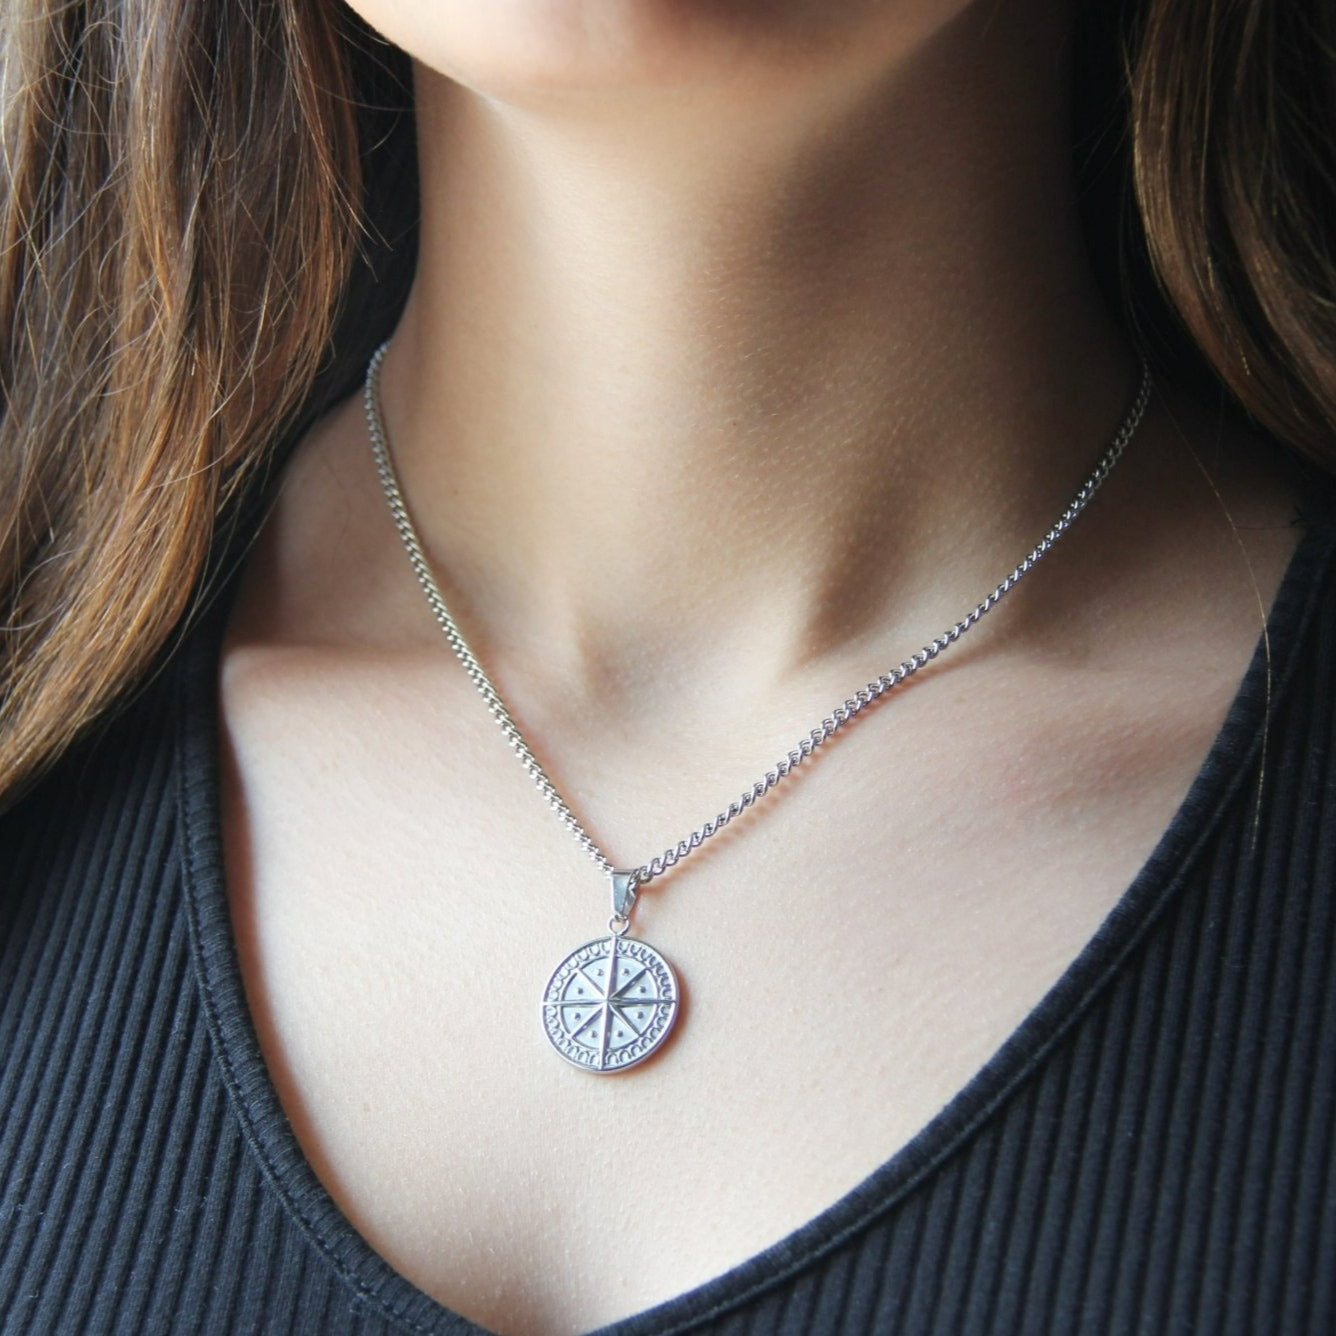 Silver Compass Pendant Necklace For Men or Women - Necklace - Boutique Wear RENN